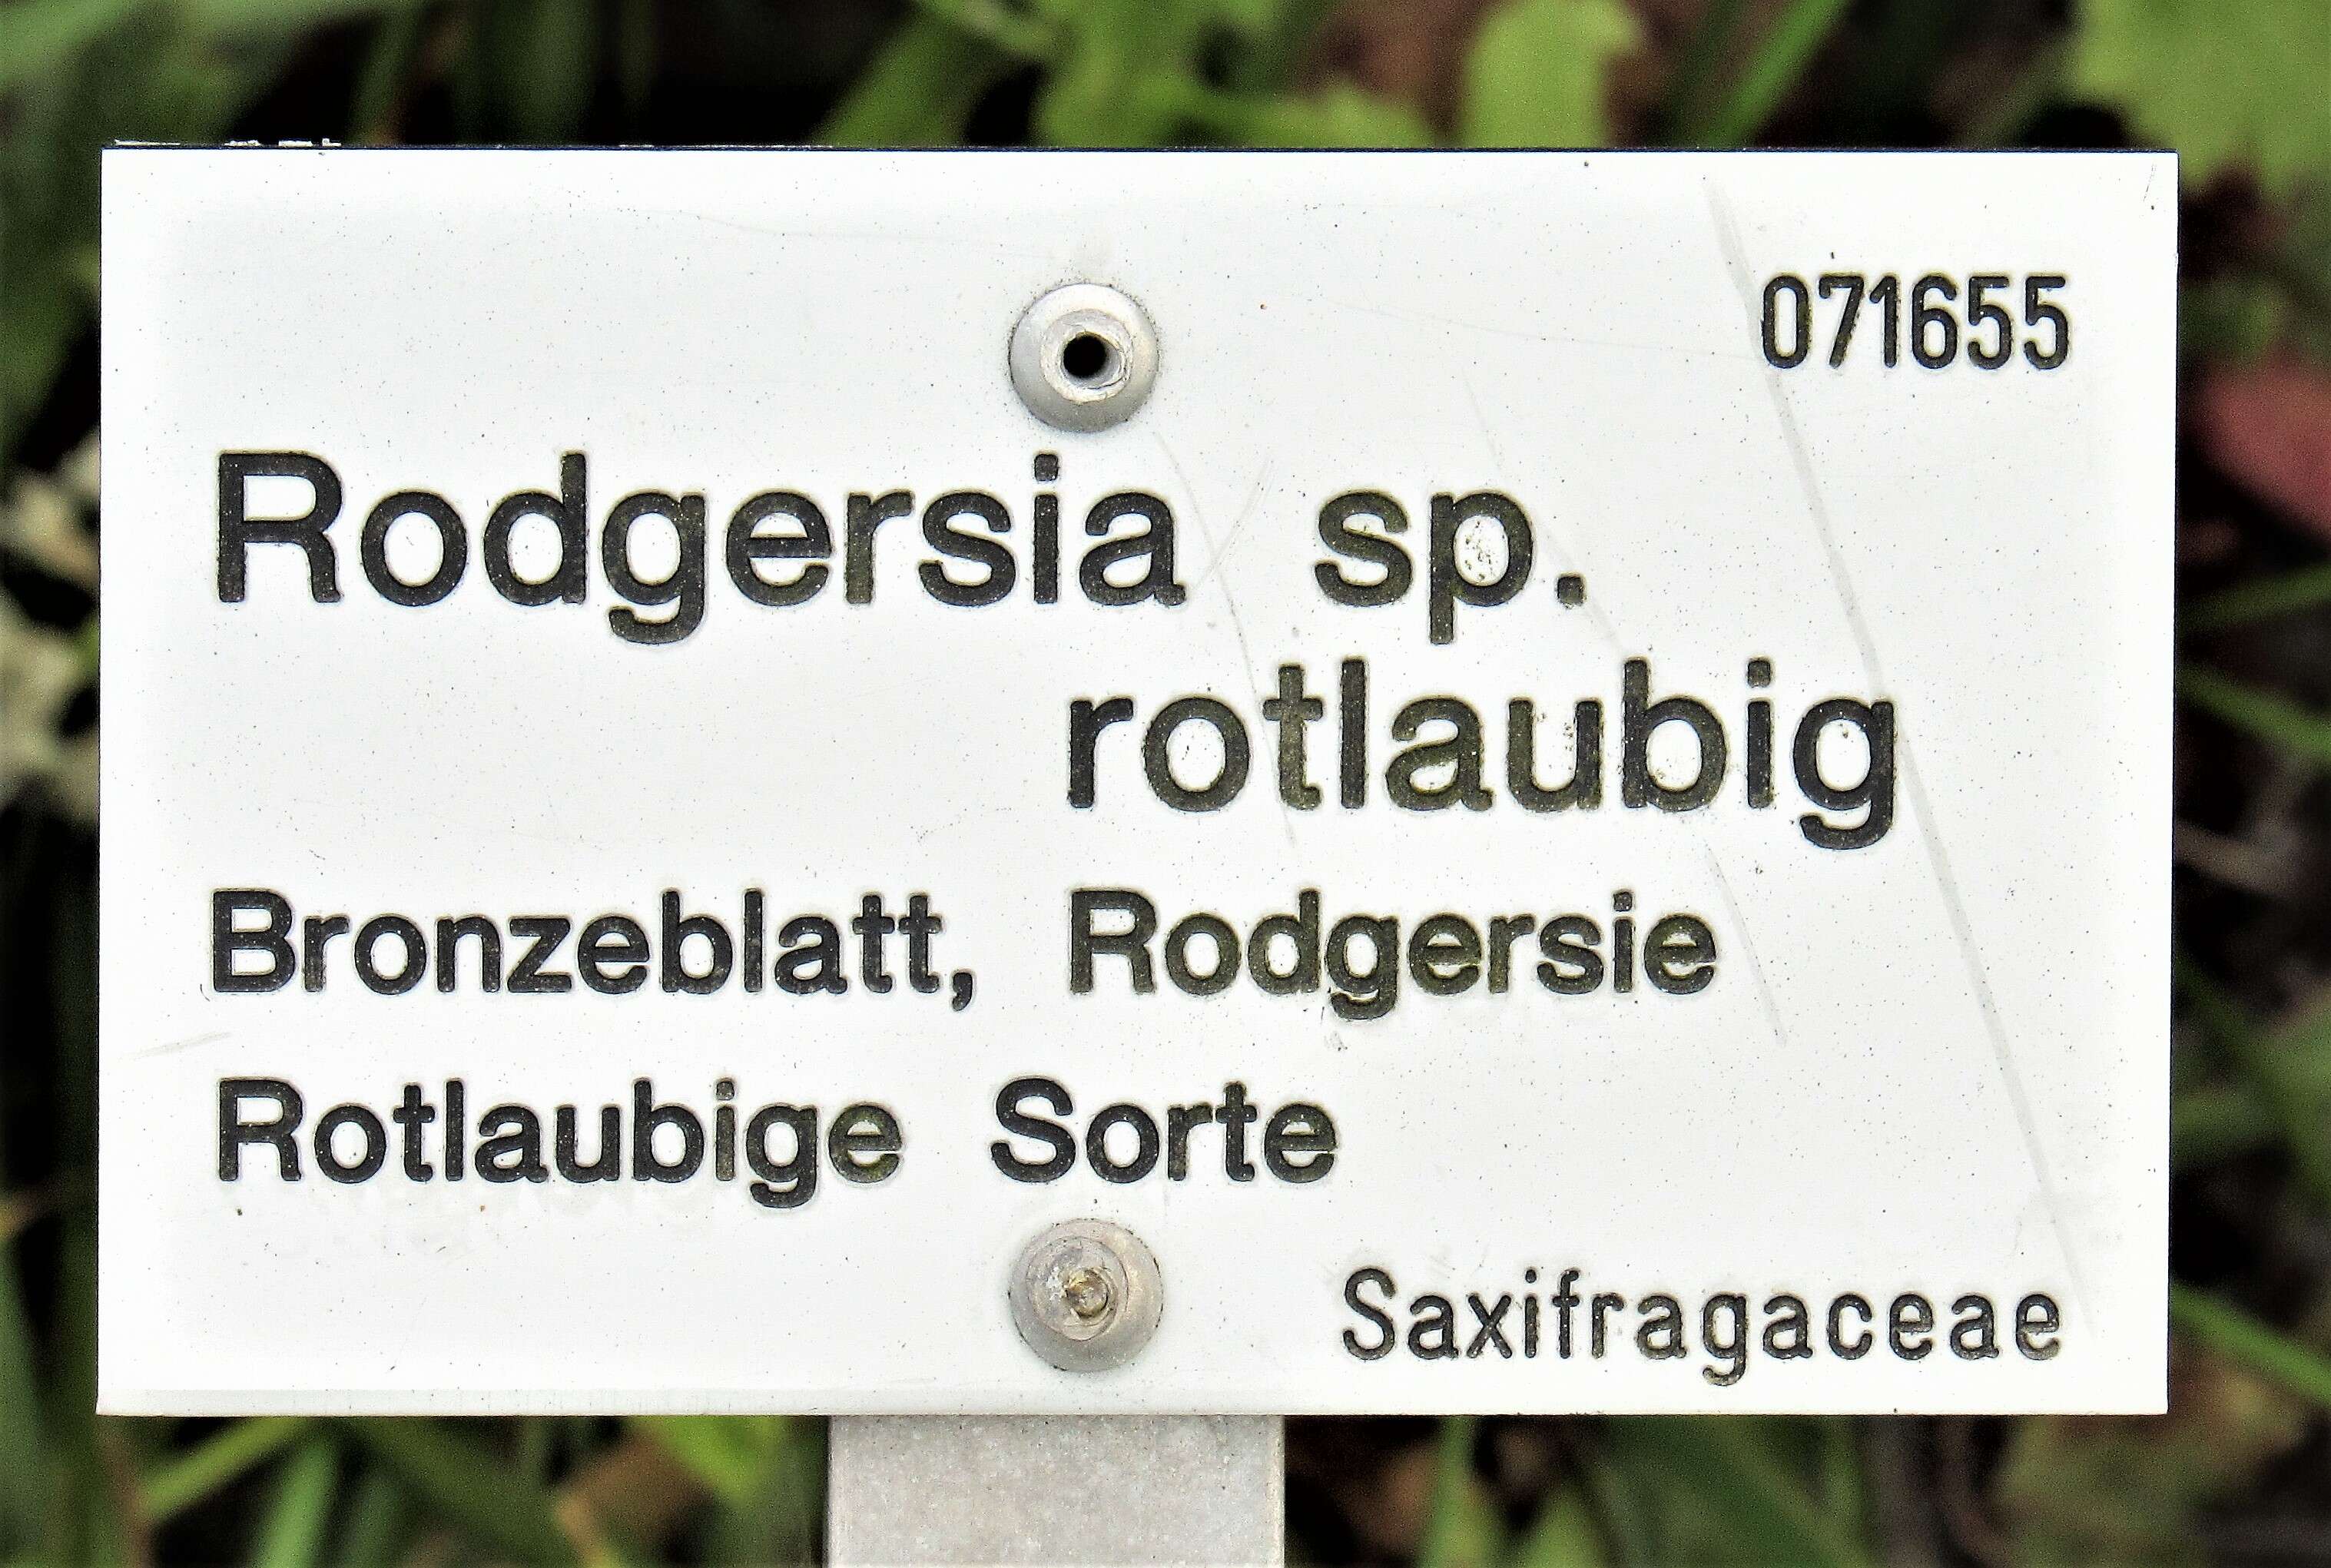 Image of Rodgersia